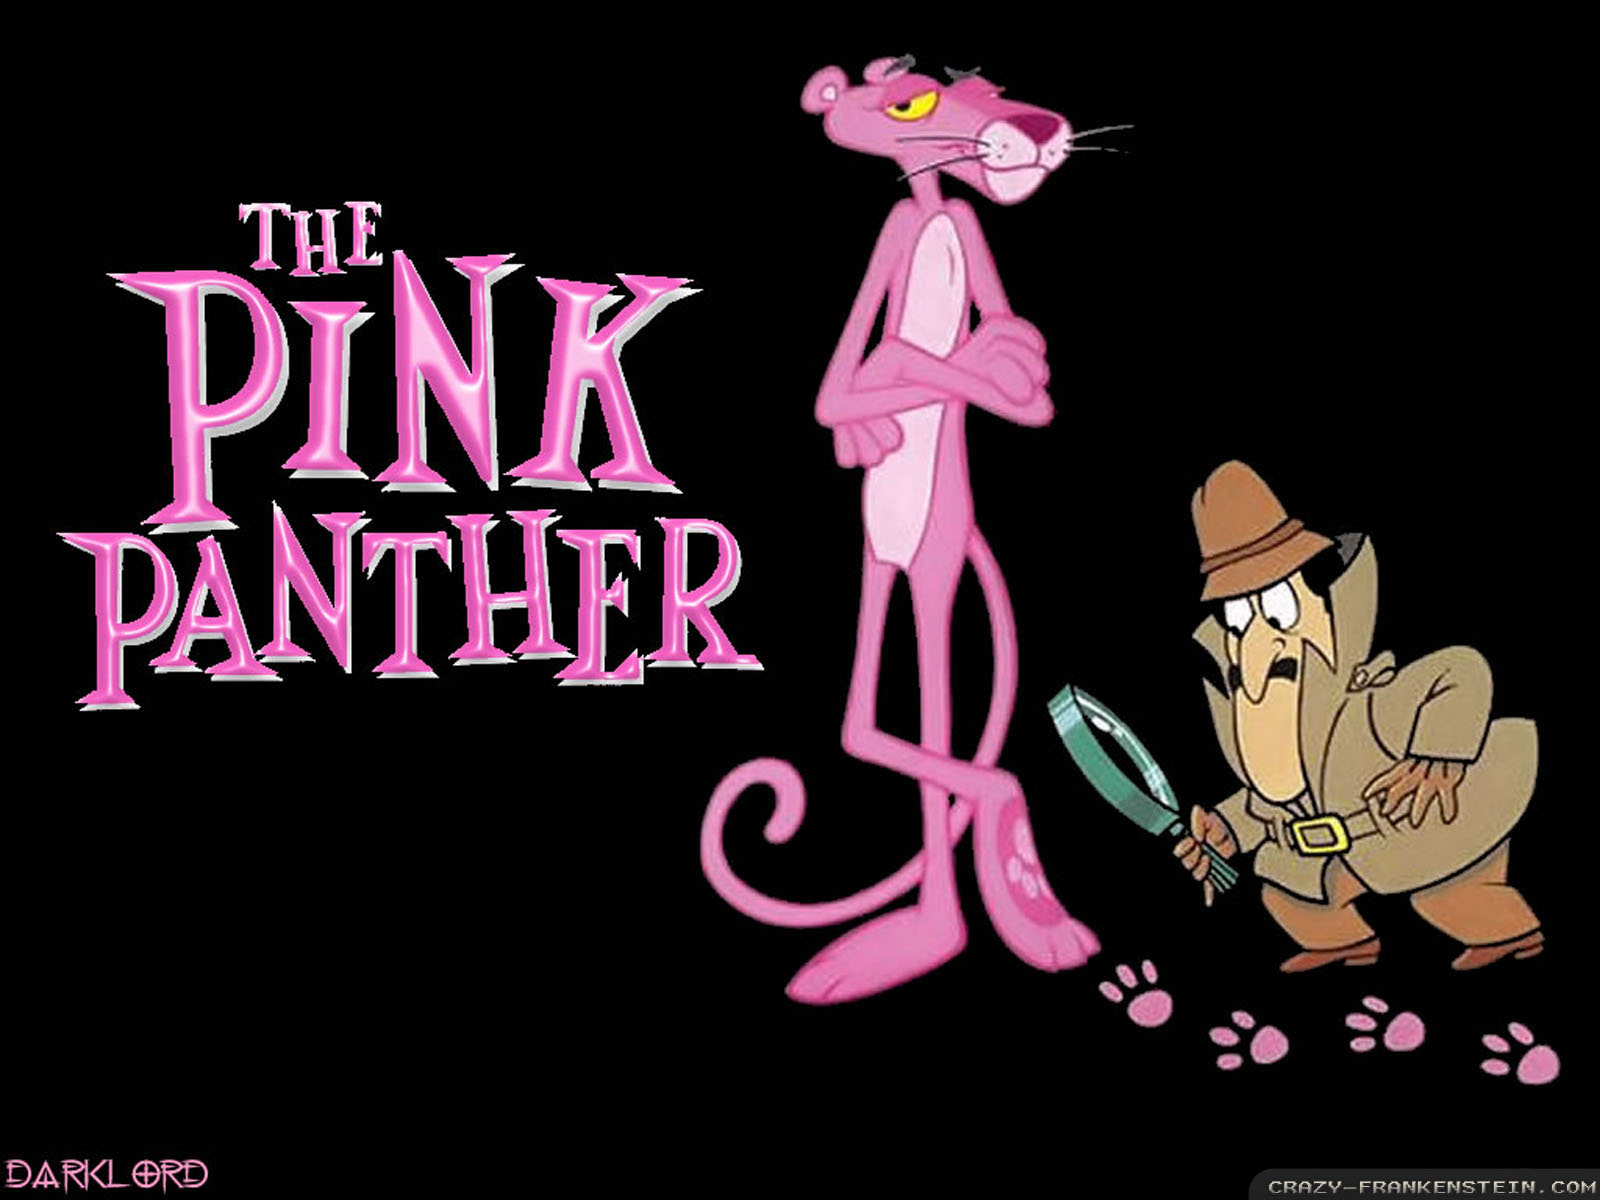 The Pink Panther Theme - Wikipedia